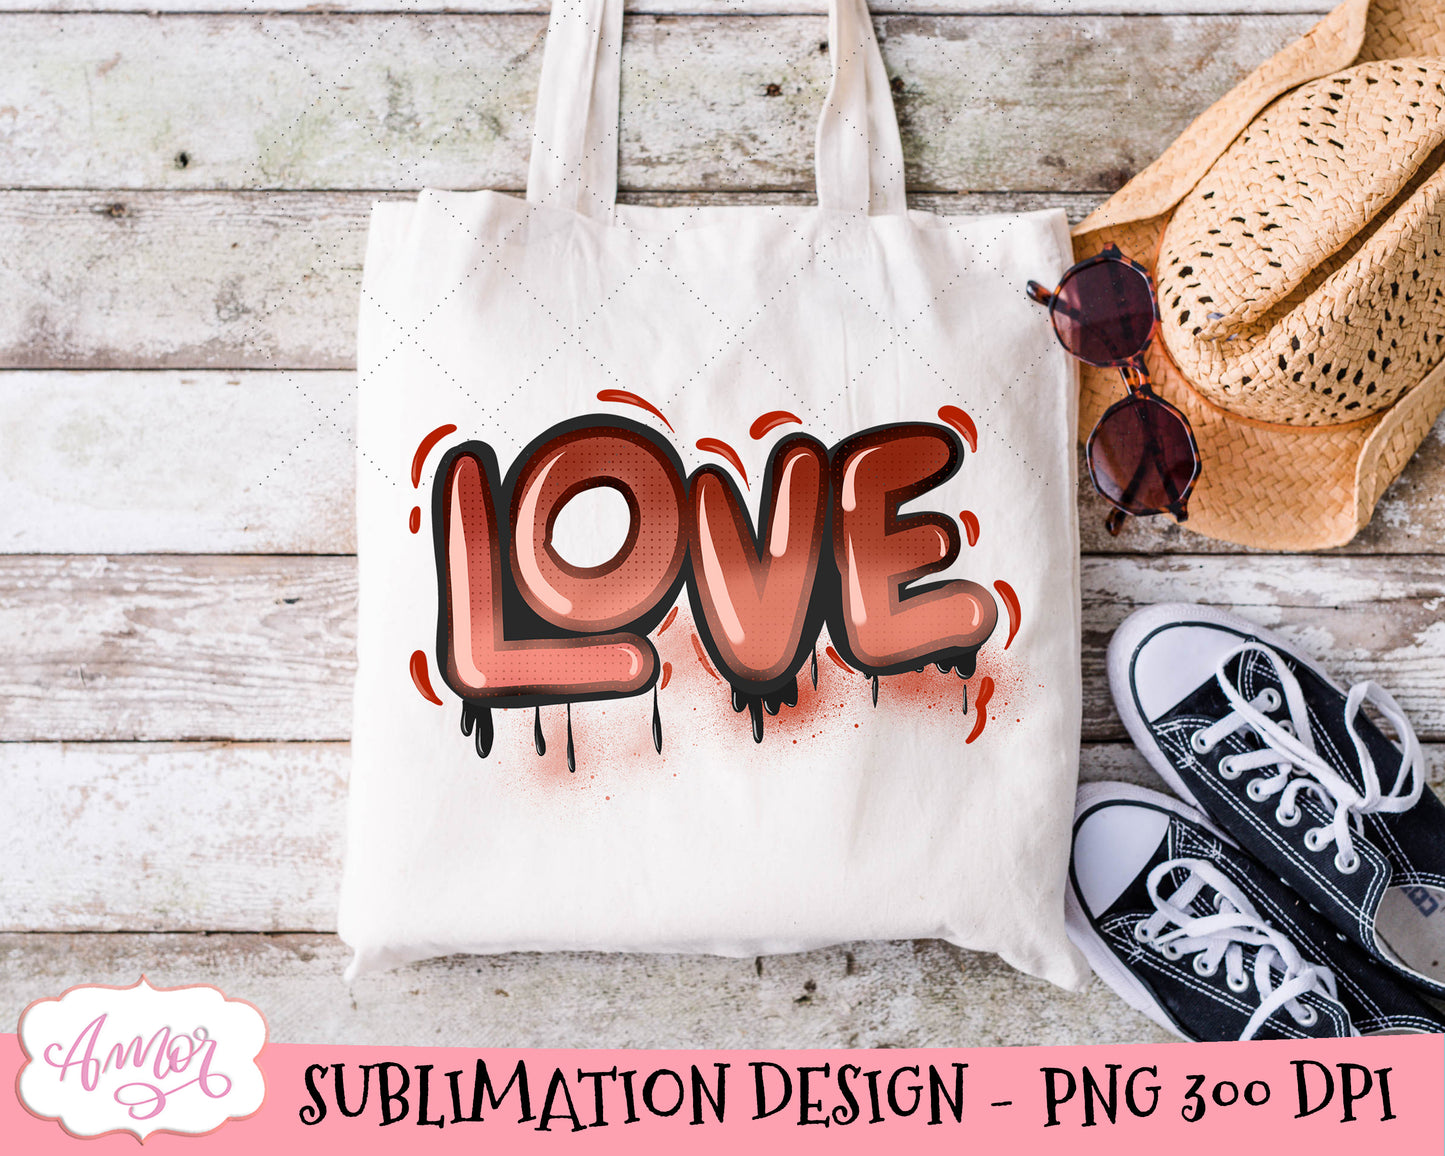 Love sublimation design for T-shirts